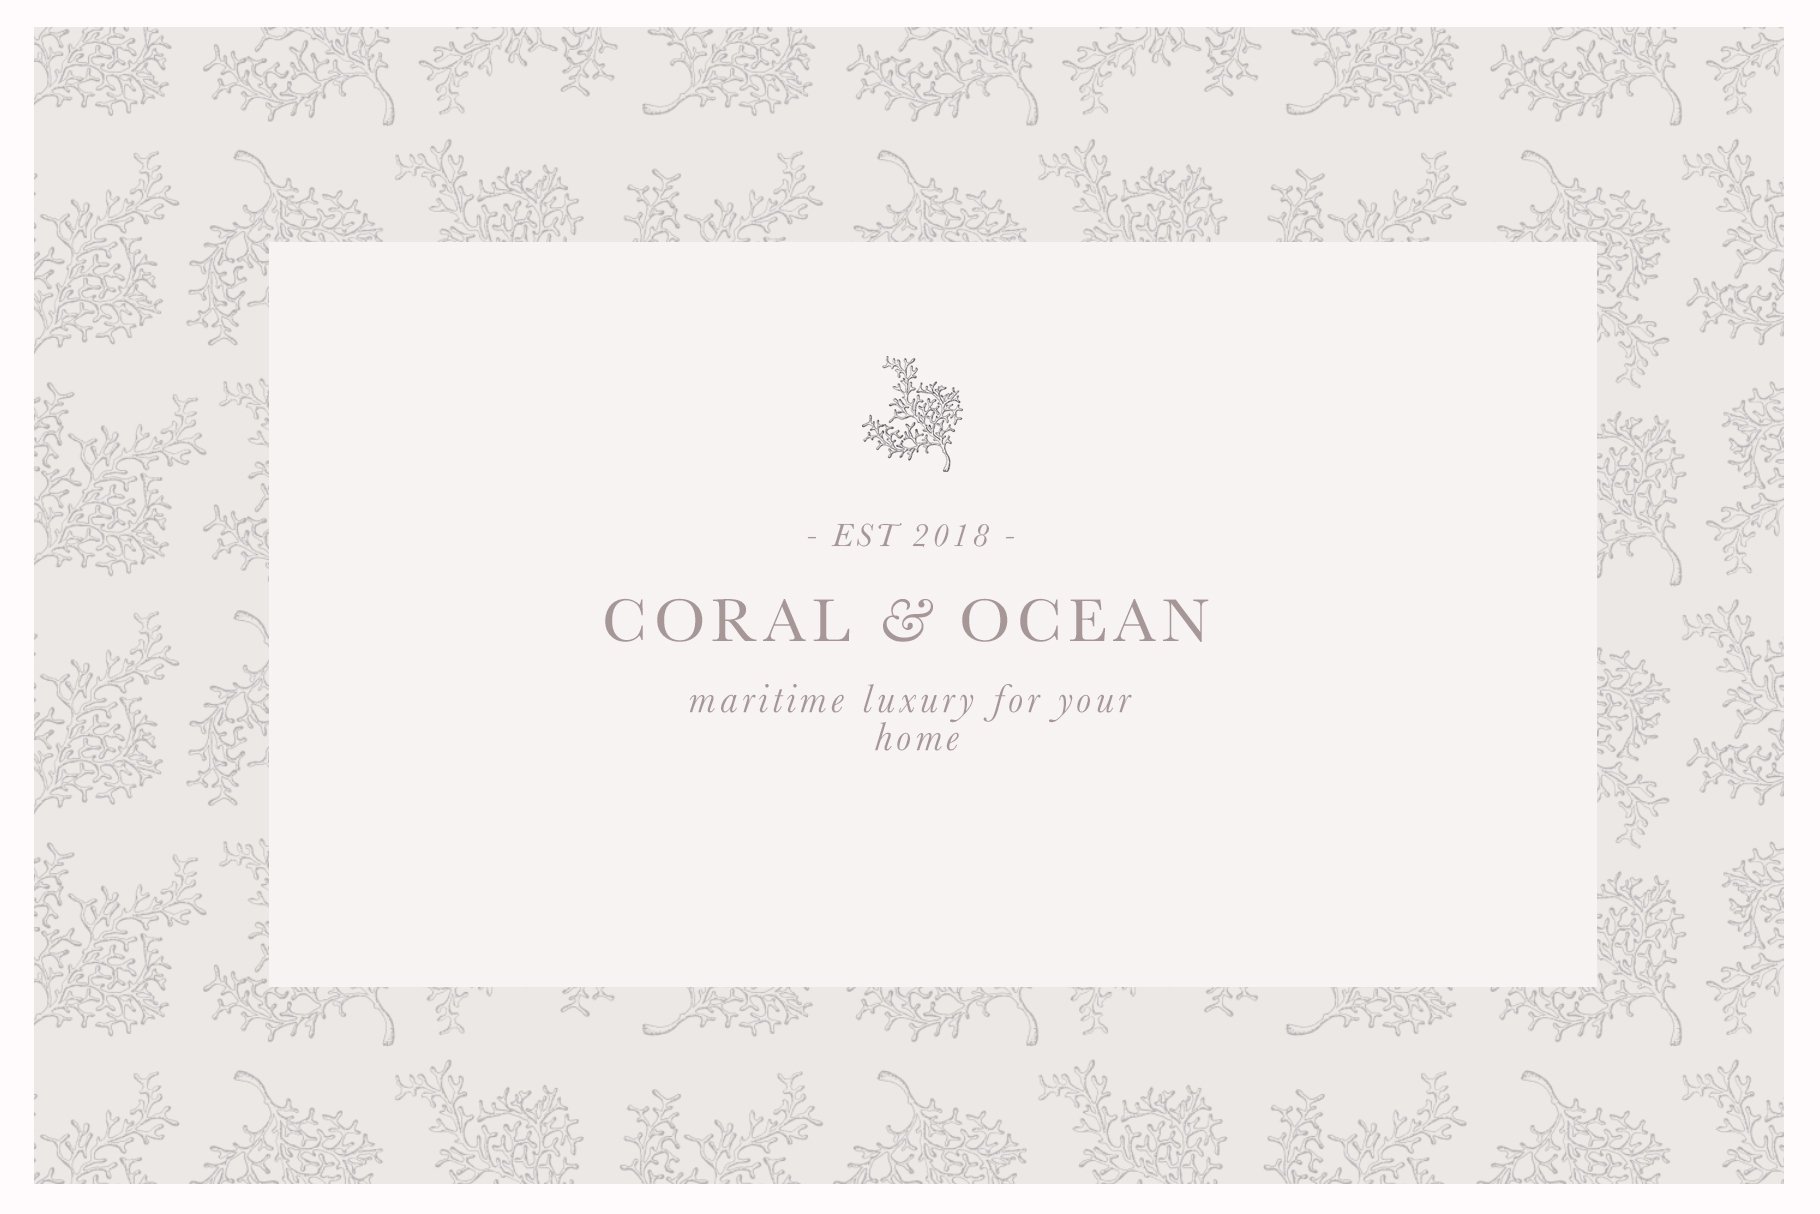 02 the reef corallocean logo 566